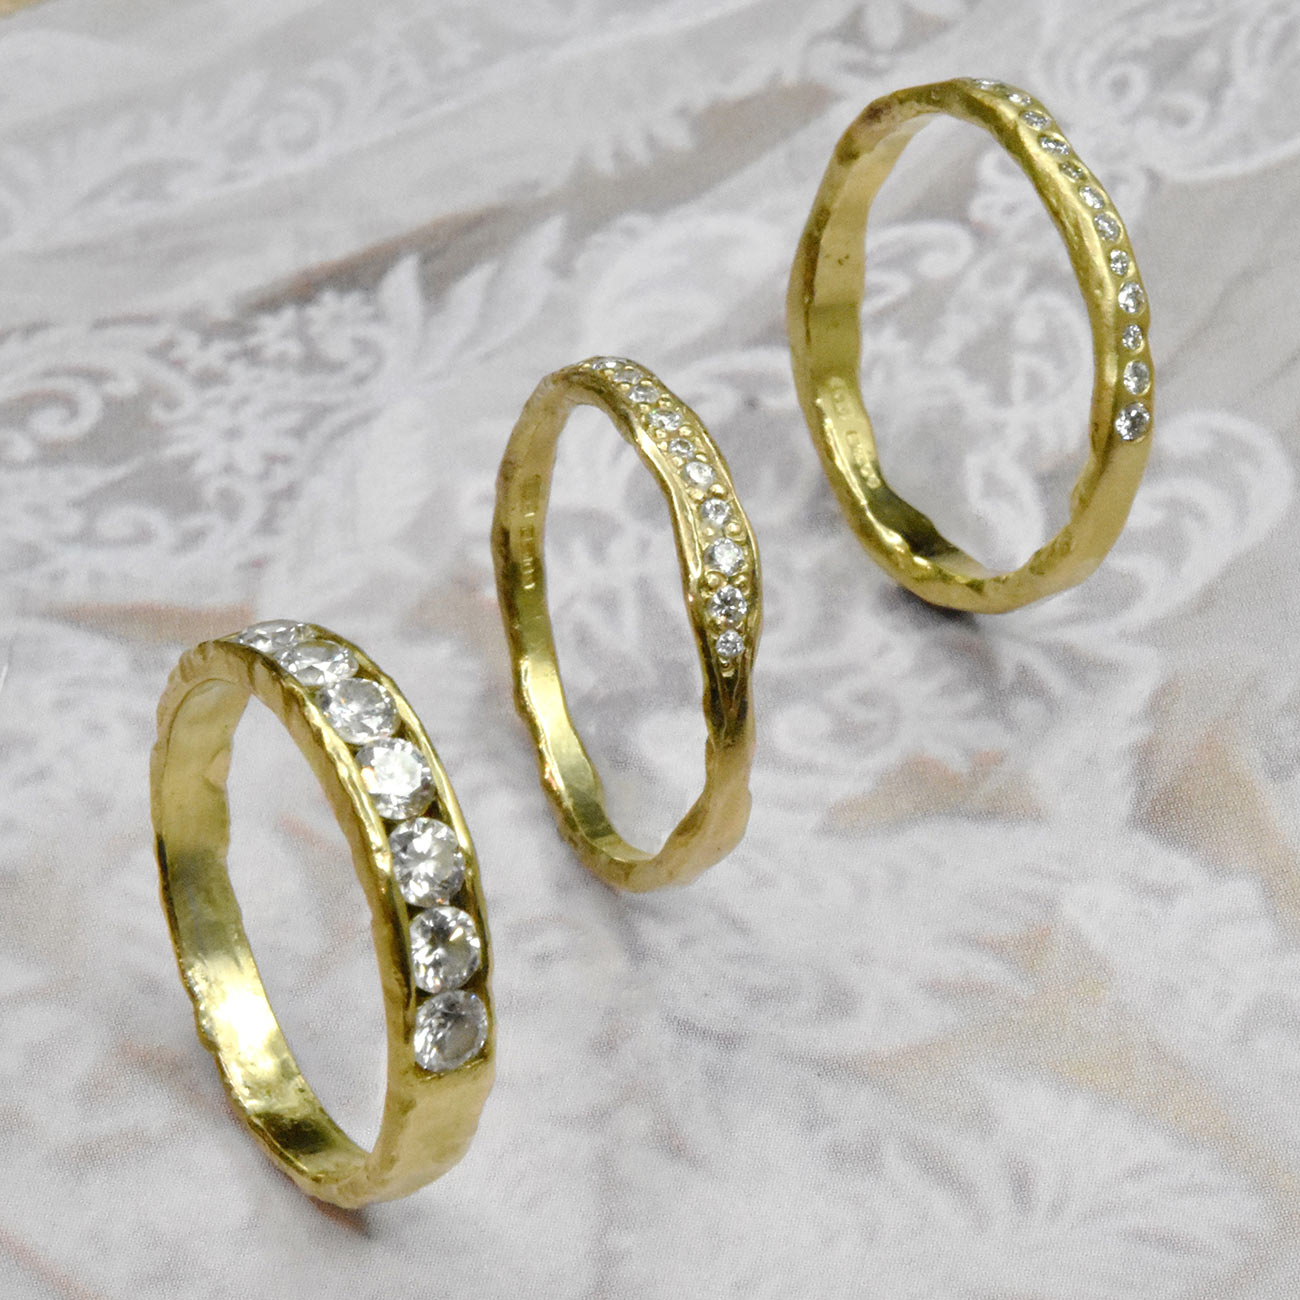 Erin Cox Jewellers Ring Feature Wed Wedding Cornwall Devon Bride2